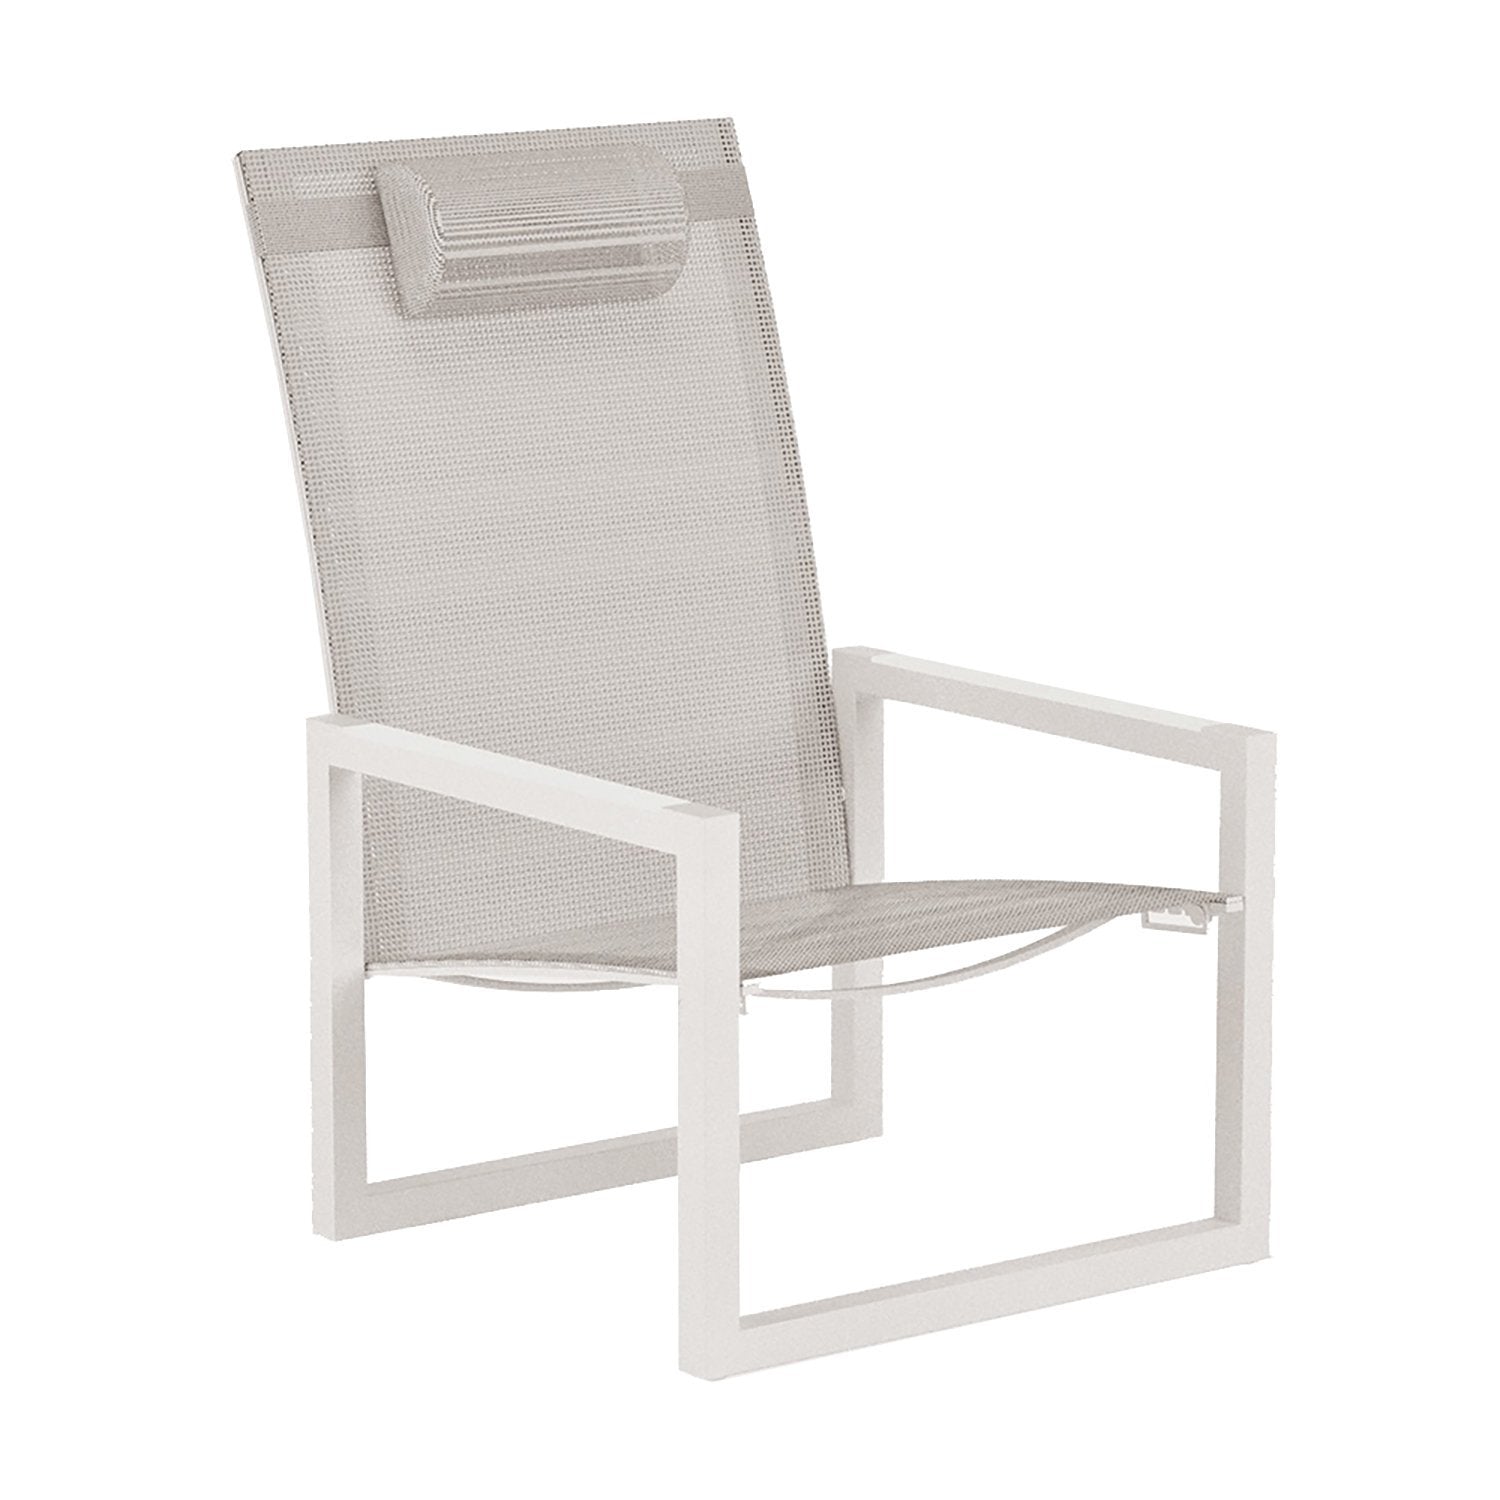 Ninix 60 Powder-coated Relax Chair